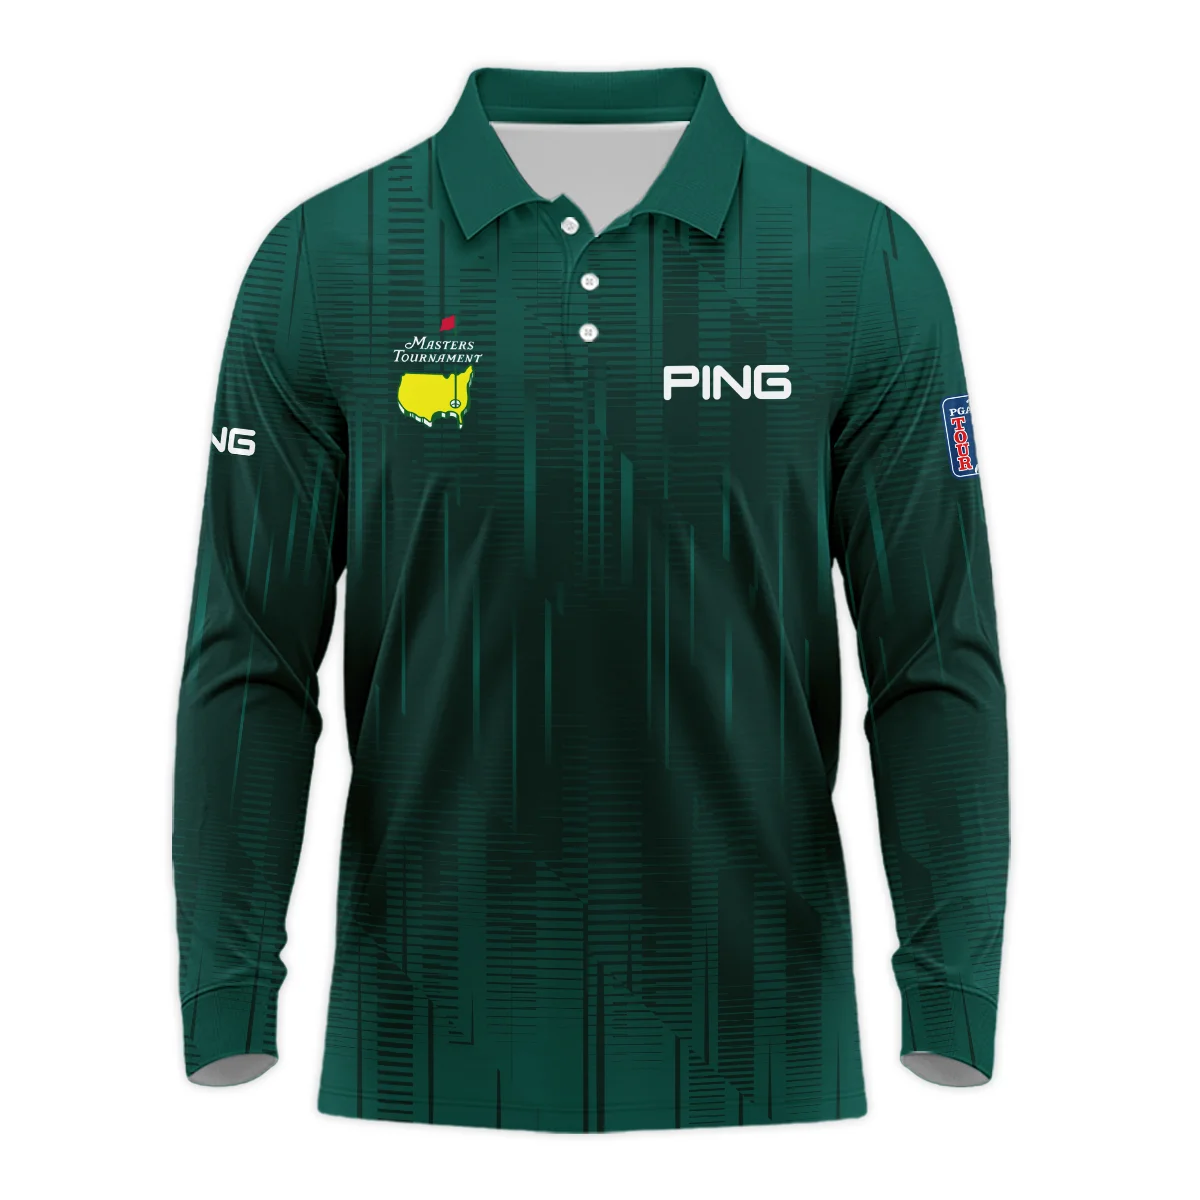 Masters Tournament Ping Dark Green Gradient Stripes Pattern Hawaiian Shirt Style Classic Oversized Hawaiian Shirt